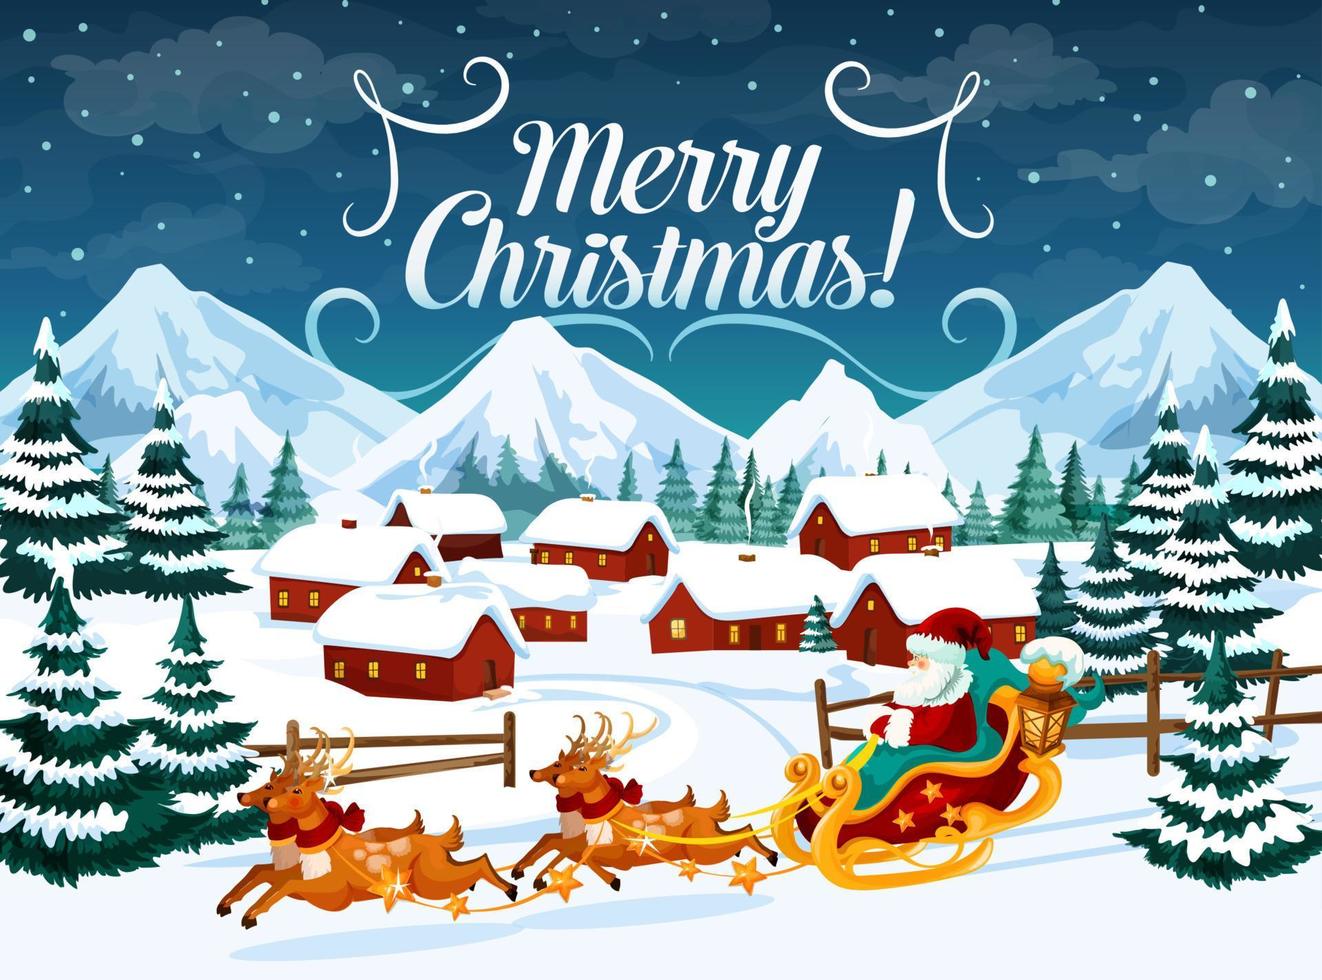 Winter town, Christmas Santa sleigh and deers vector